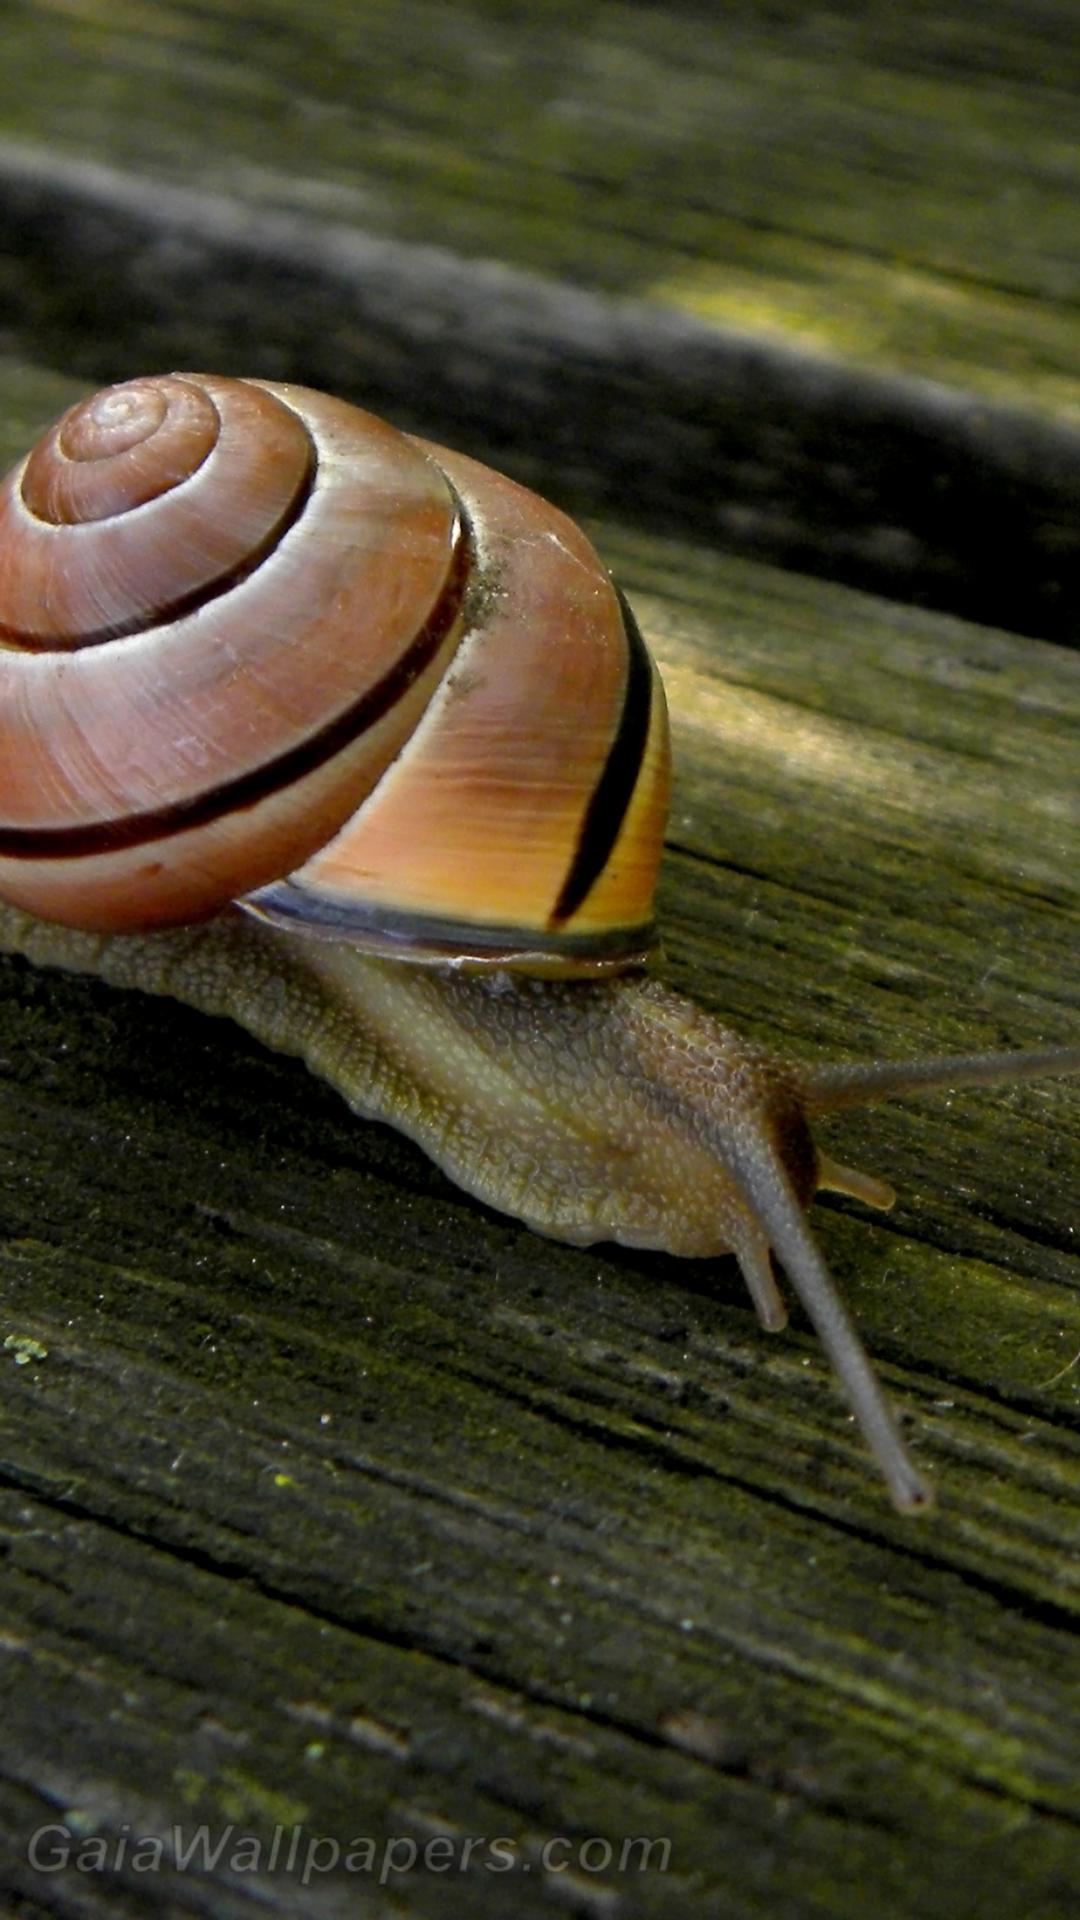 Snail crawling on a bench - Free desktop wallpapers